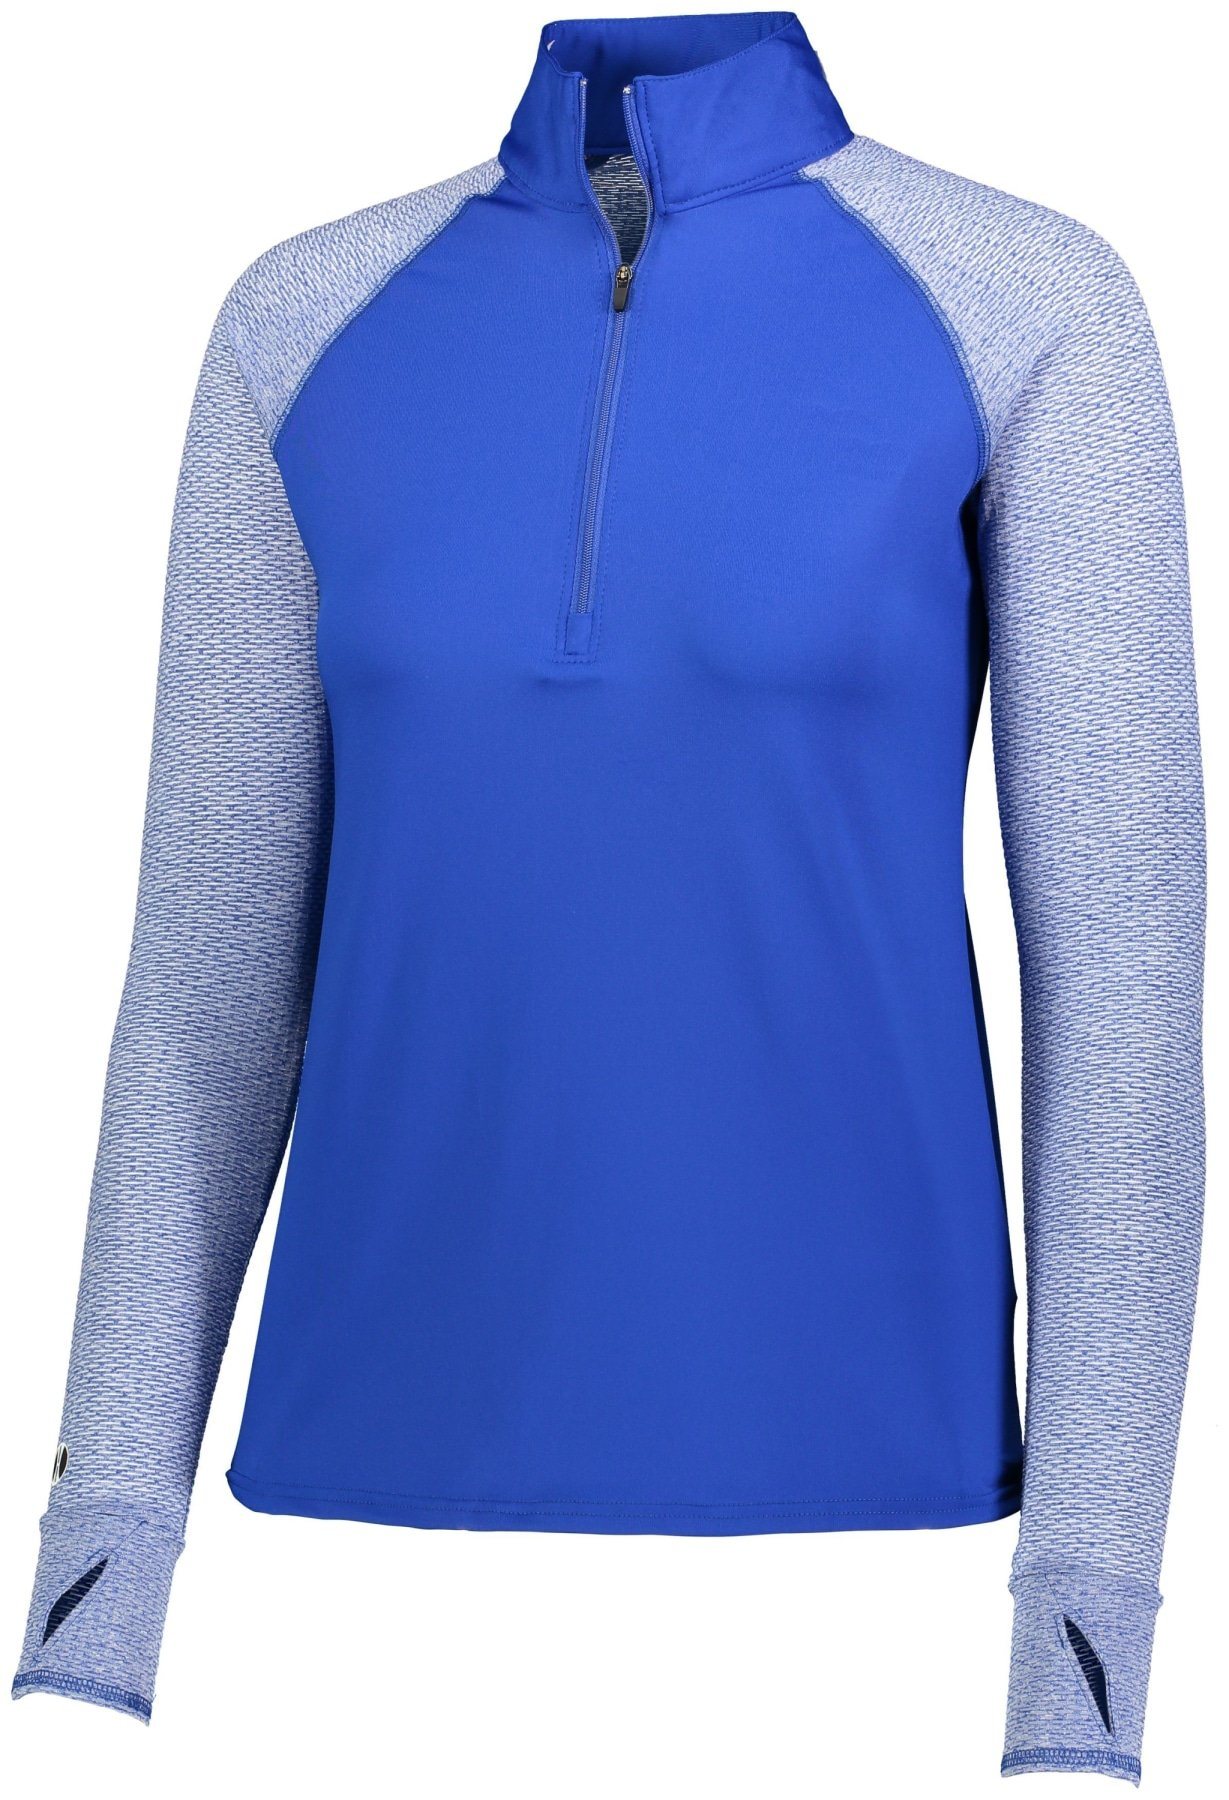 Ladies Athletic Shirt, Long Sleeve Axis 1/2 Zip Pullover 45